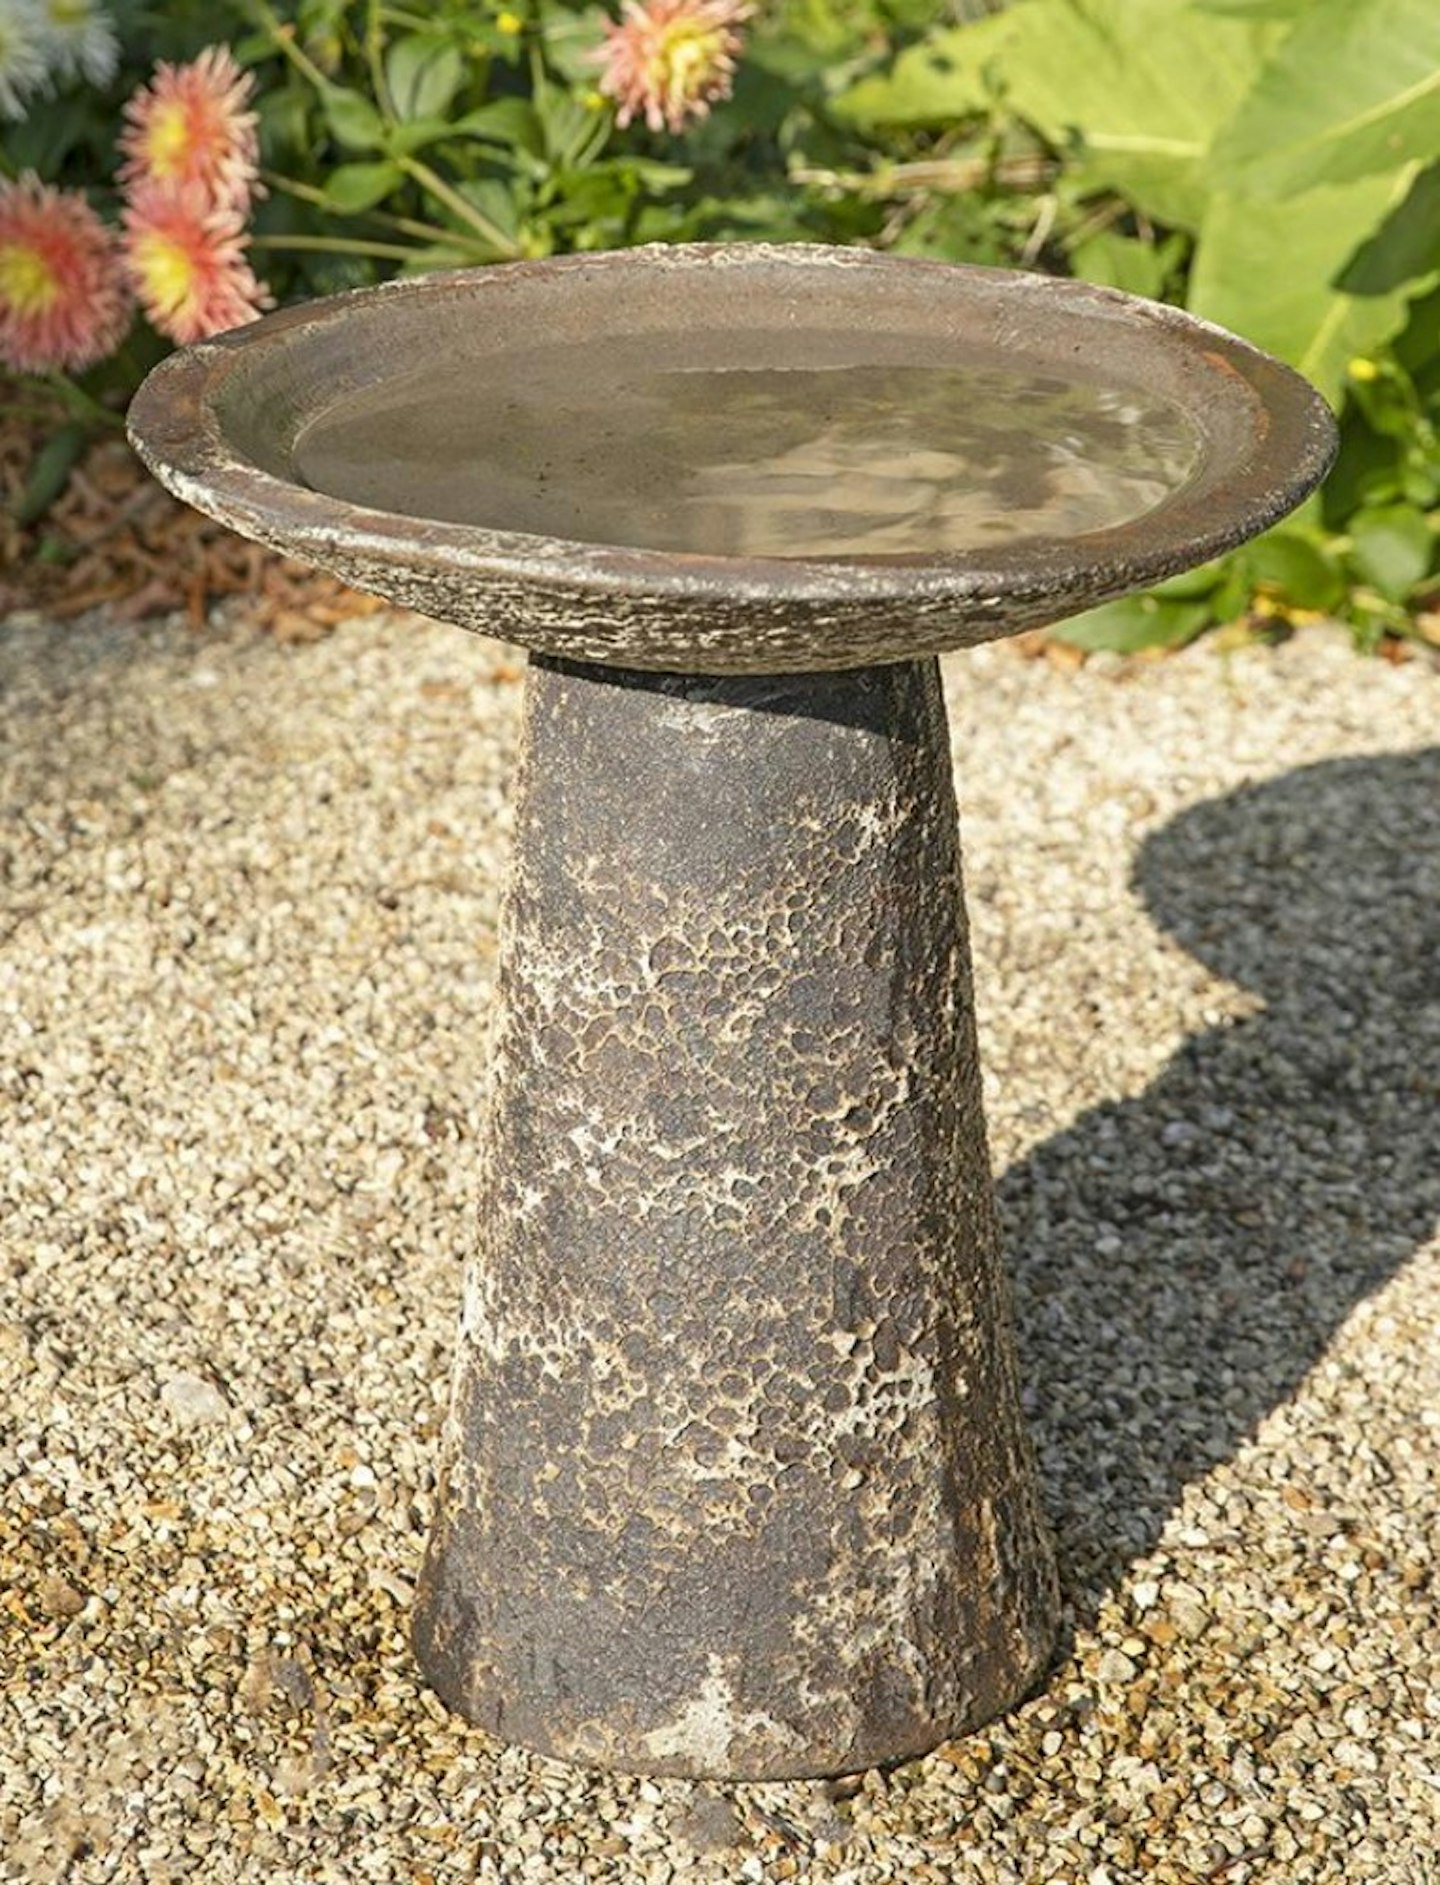 Garden stone bird bath 